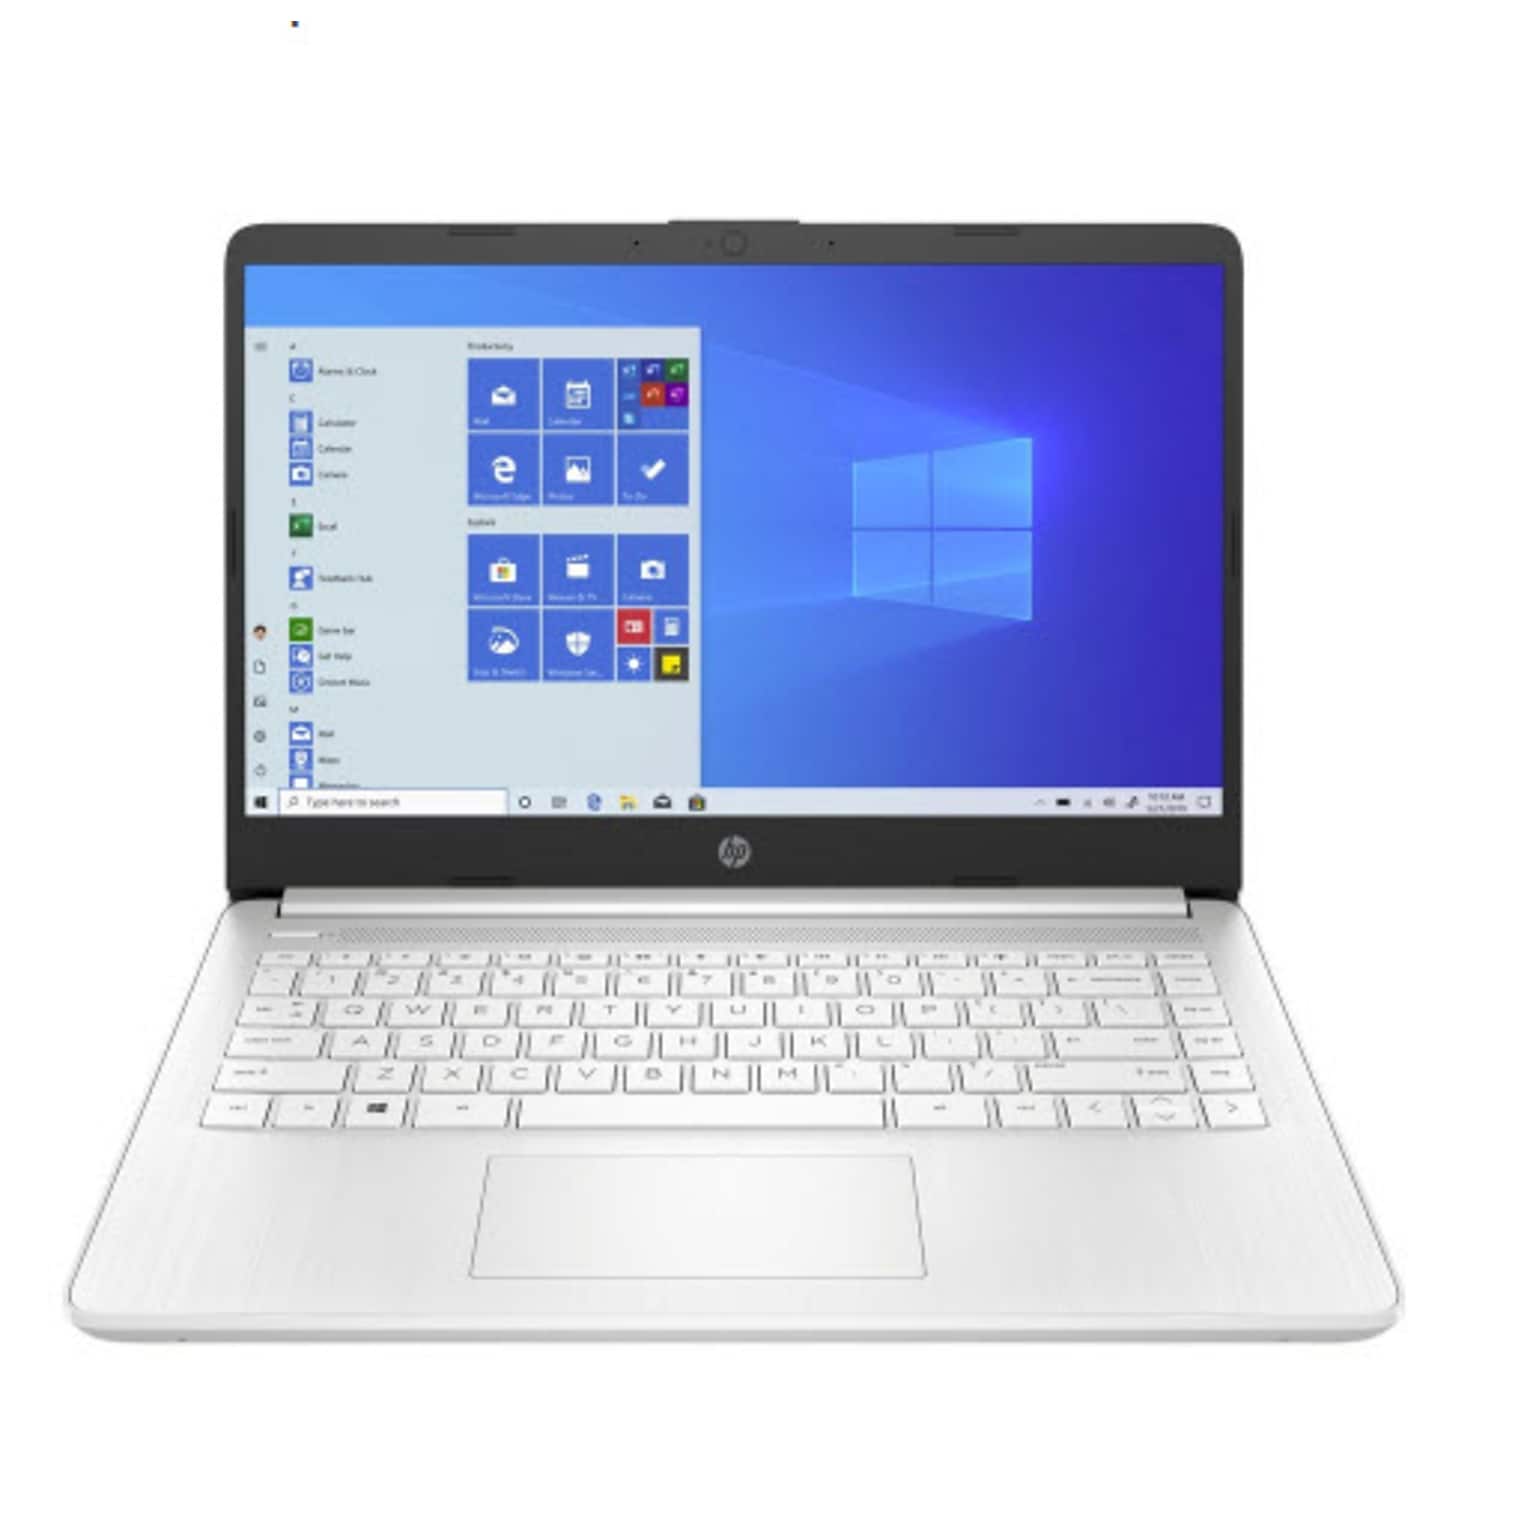 HP 14 Laptop, Intel Celeron N4020, 4GB, 64GB Flash Memory, Windows 10 Home (47X78UA#ABA)